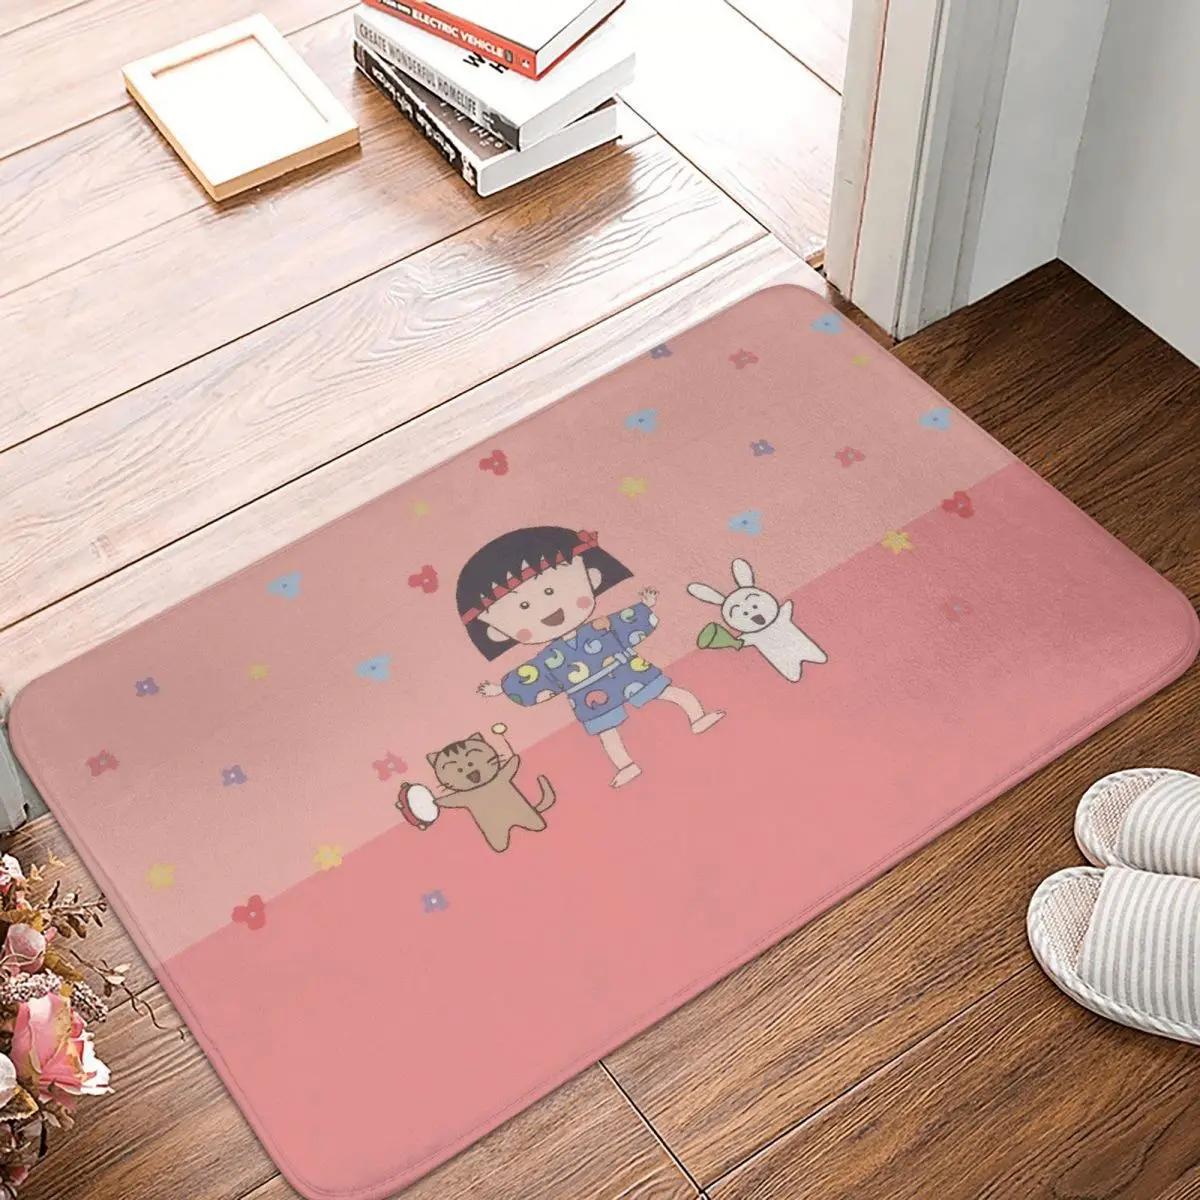 

Chibi Maruko-chan Cute Girl Kitchen Non-Slip Carpet Pink Bedroom Mat Welcome Doormat Home Decor Rug